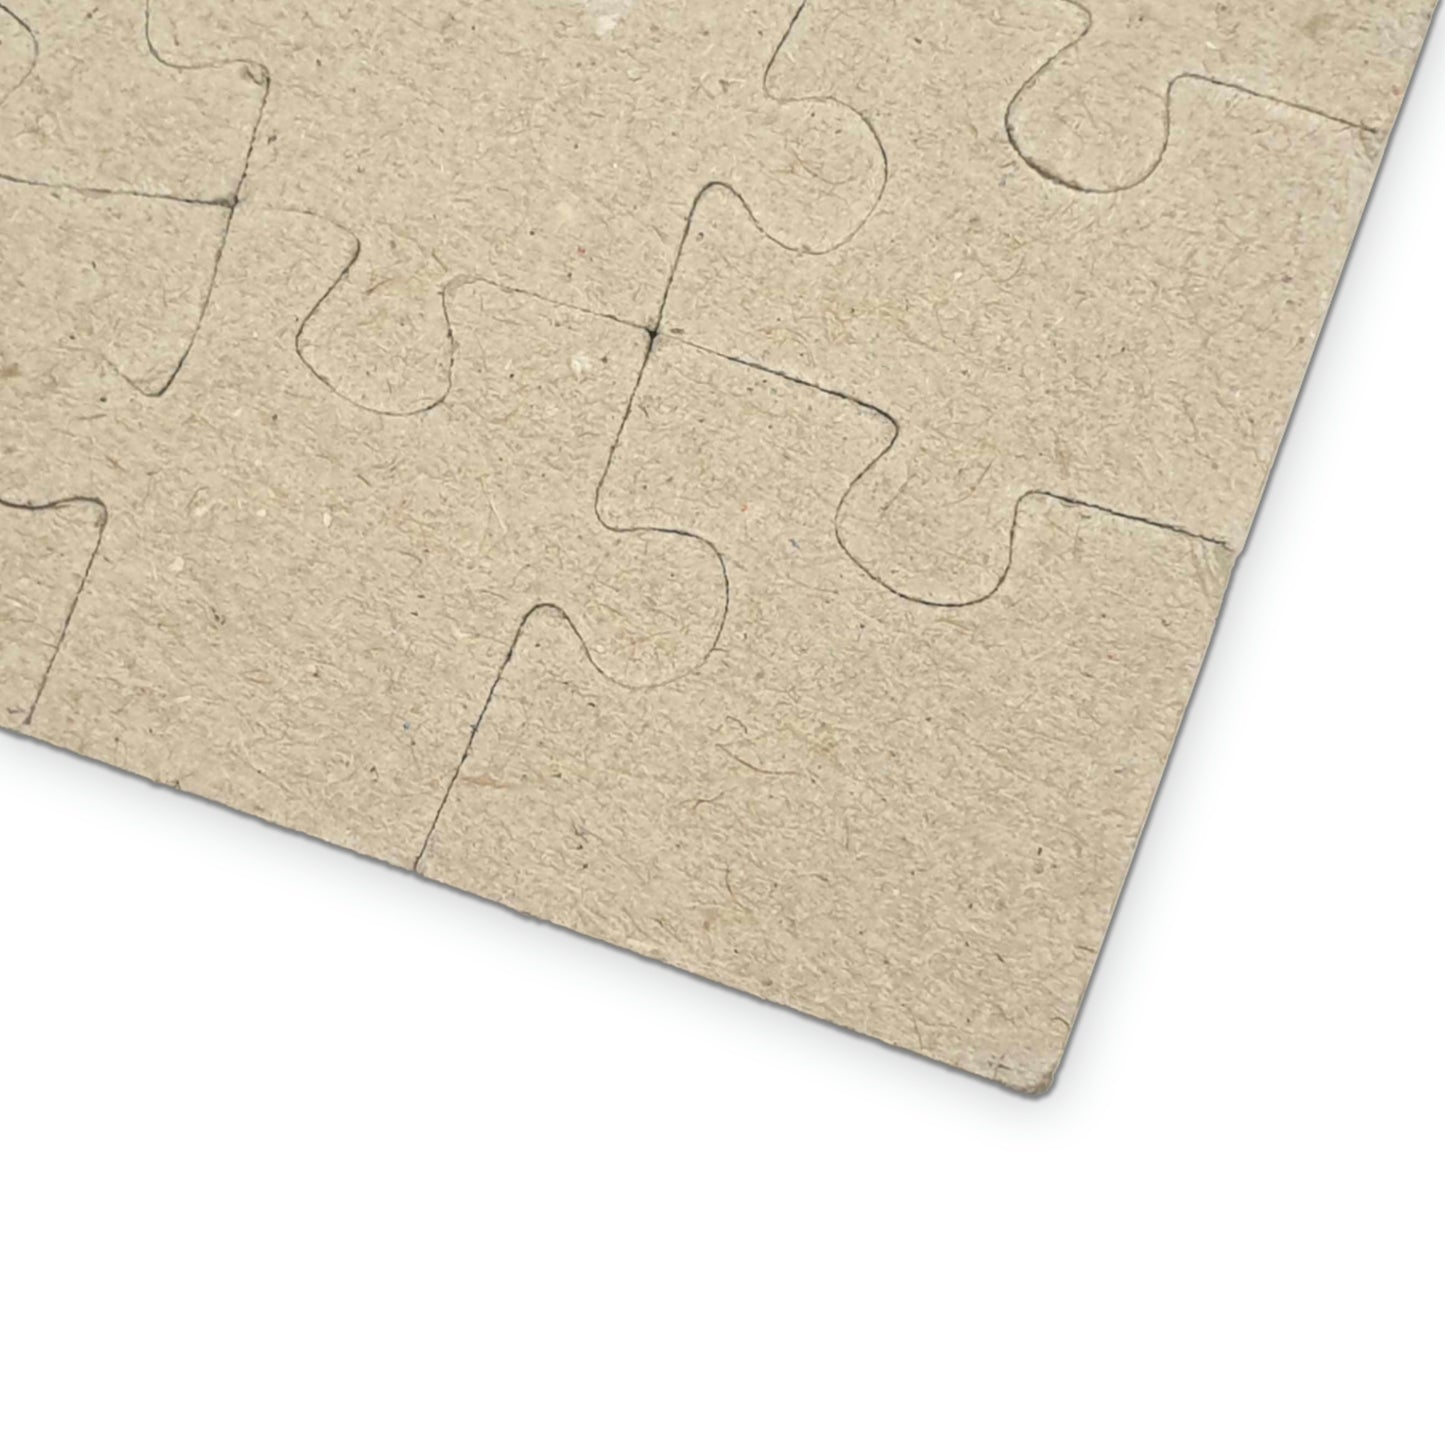 Clean Copy - 1000 Piece Jigsaw Puzzle